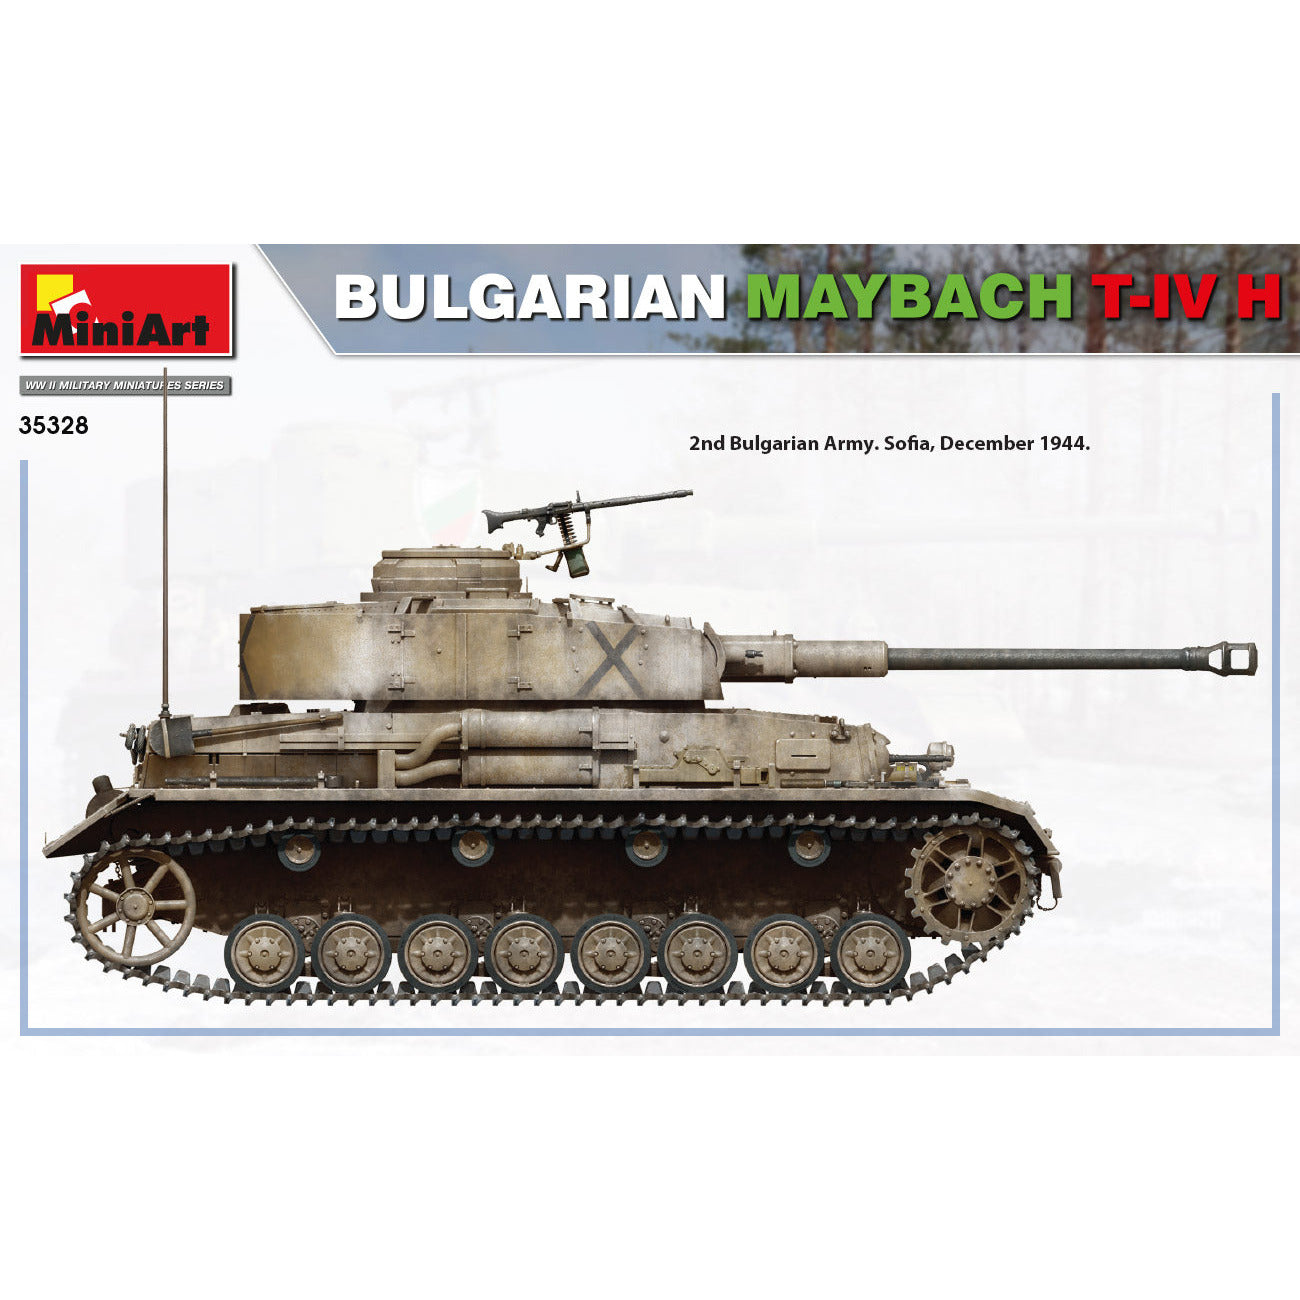 MINIART 1/35 Bulgarian Maybach T-IV H